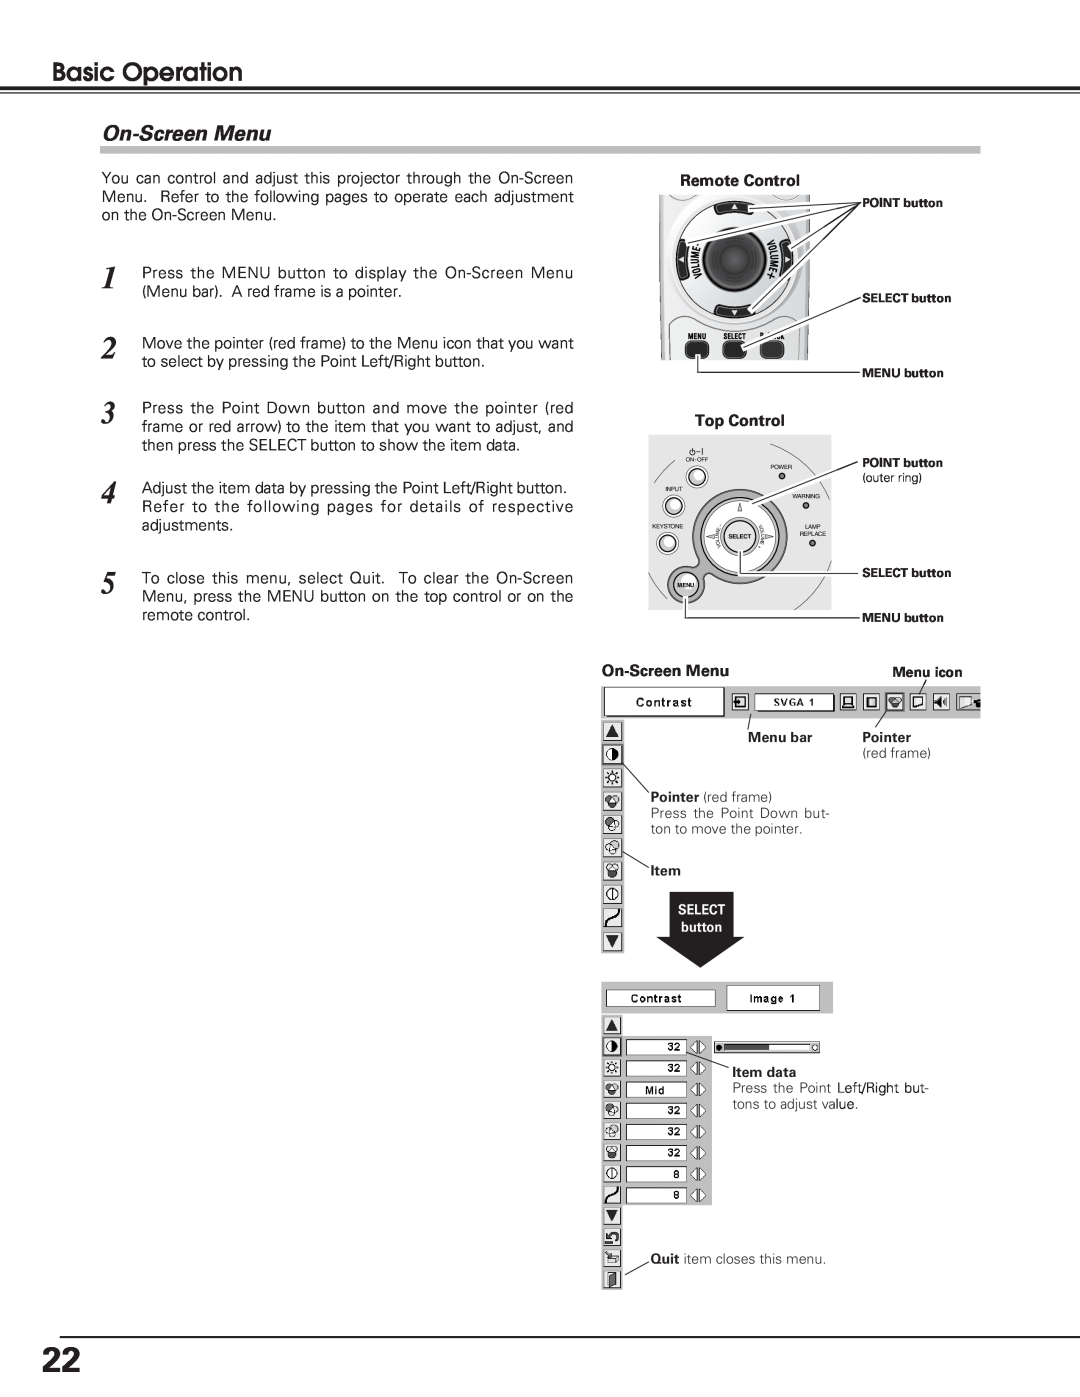 Eiki lc-sb15 owner manual On-ScreenMenu, Basic Operation, Remote Control, Top Control 